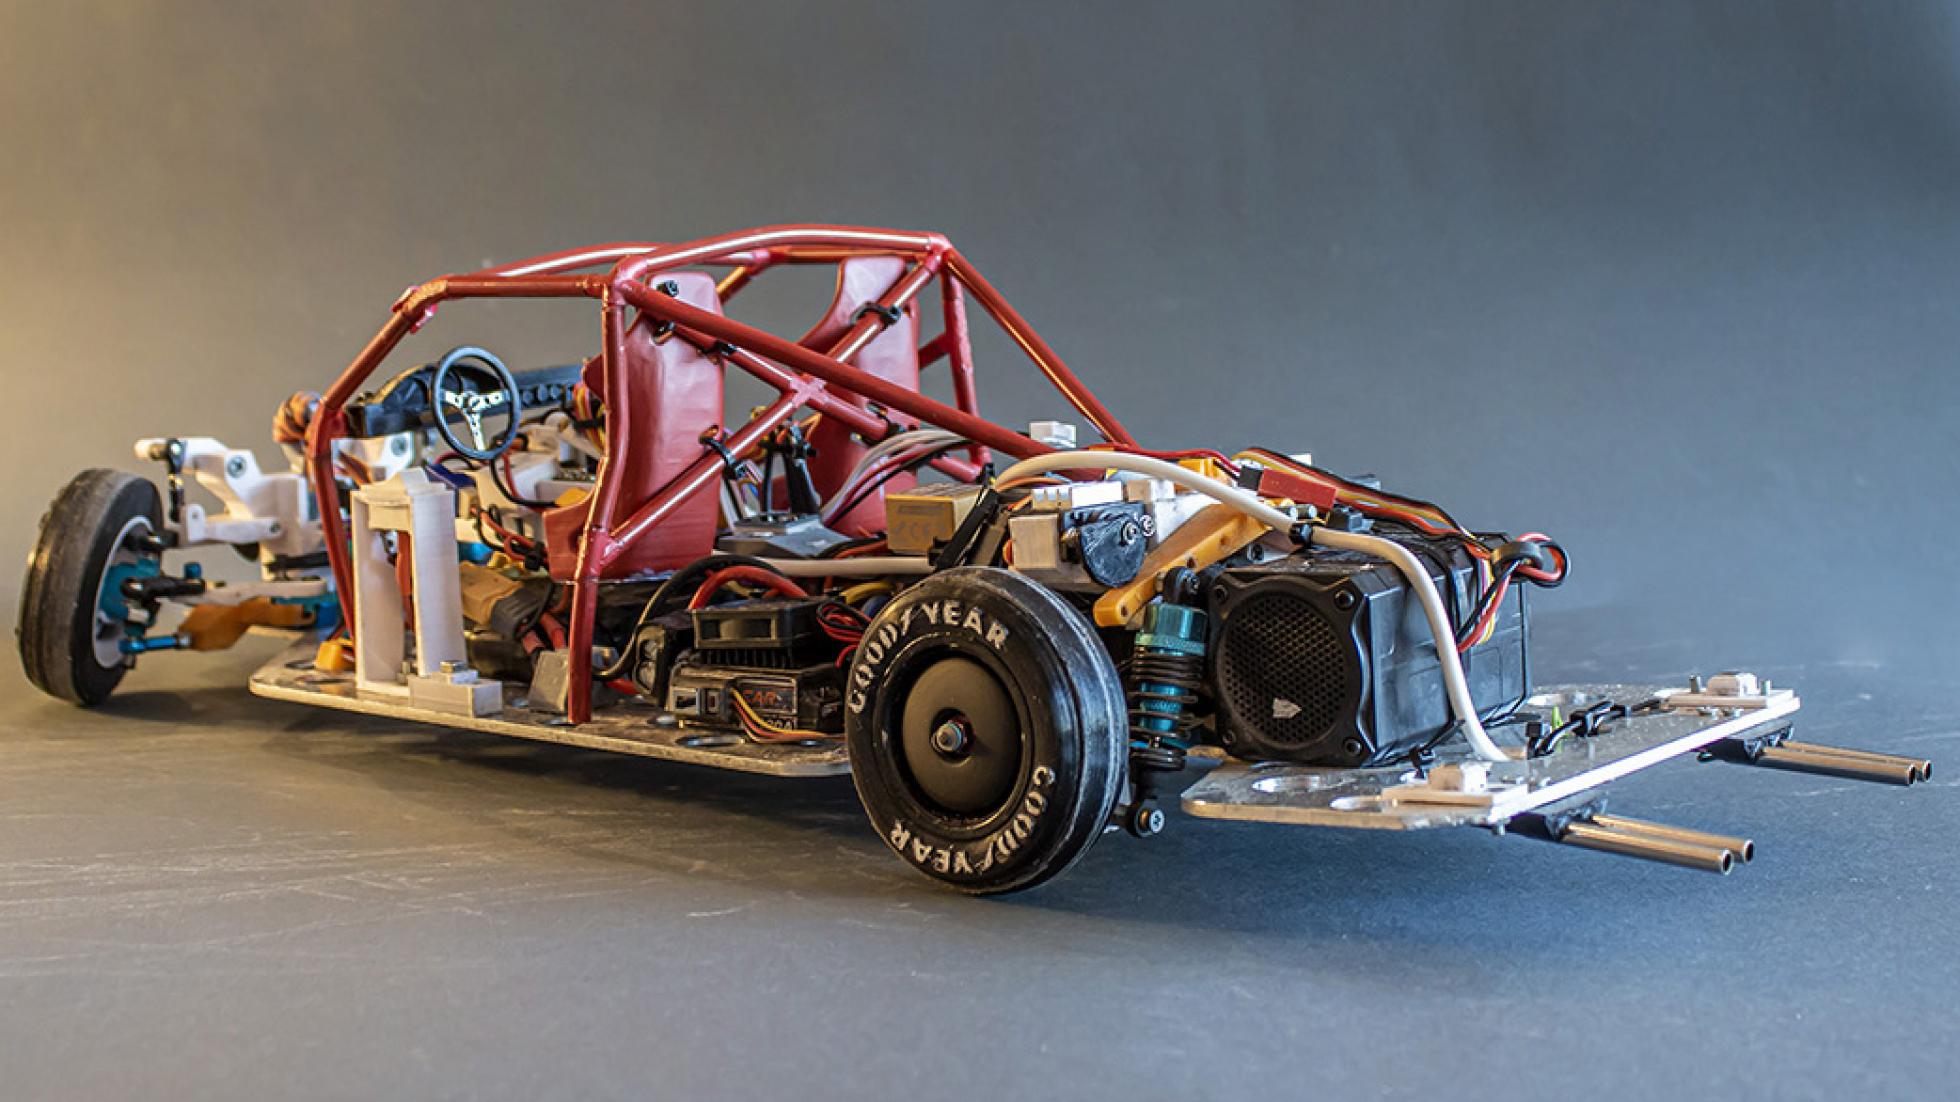 TopGear Geek out over this 3D printed R/C drift car